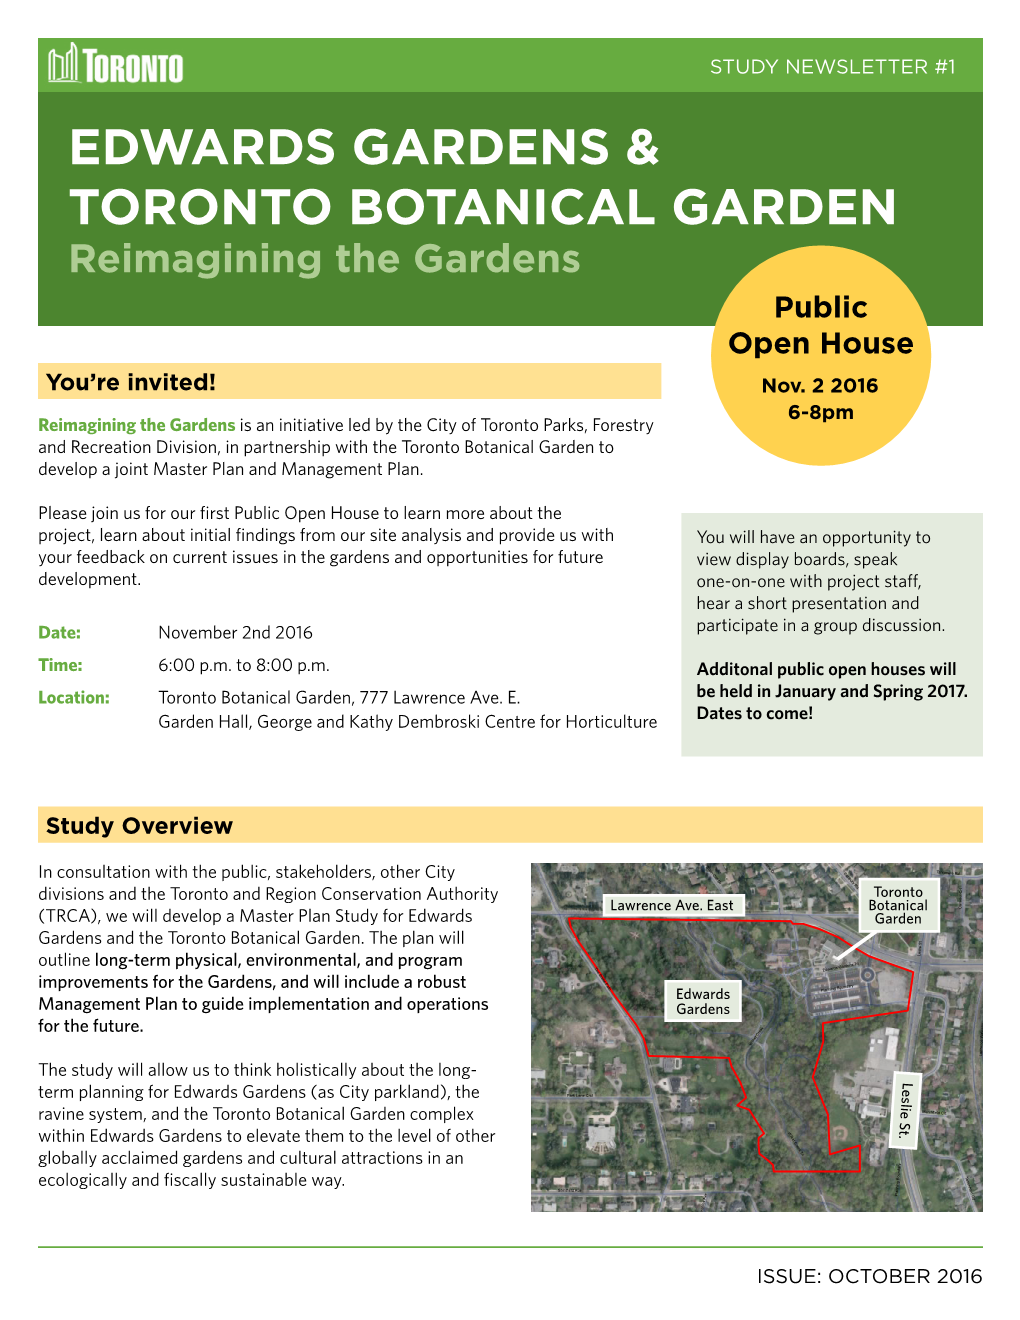 Edwards Gardens & Toronto Botanical Garden